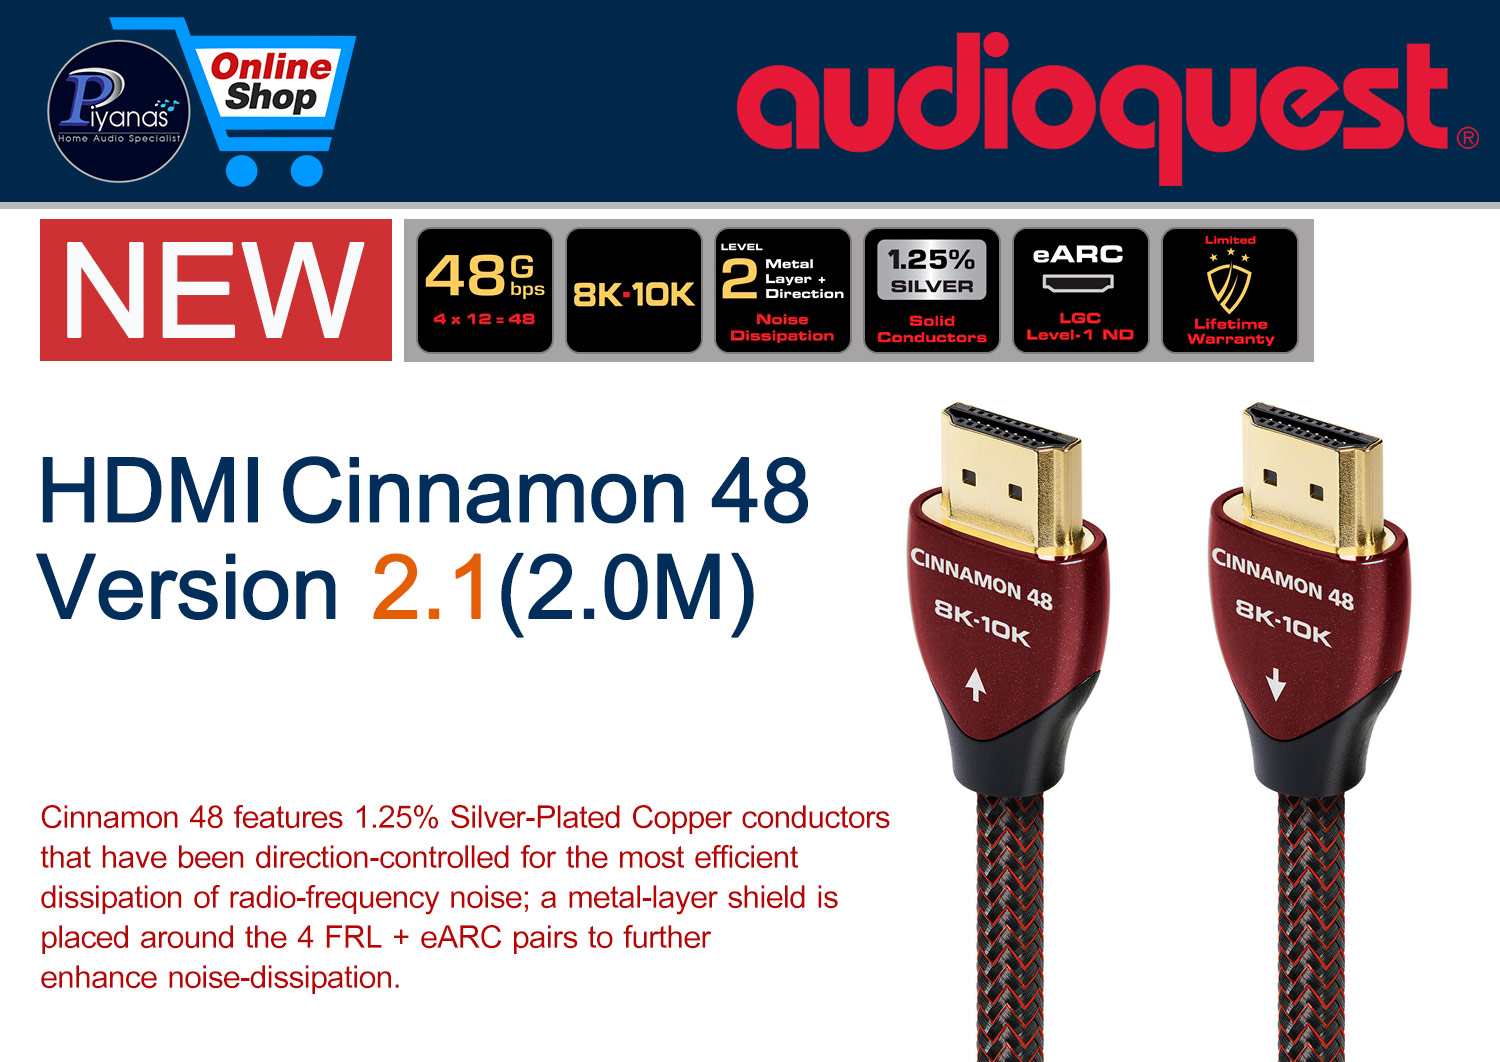 HDMI-Cinnamon 48 Version 2.1 (2.0M)